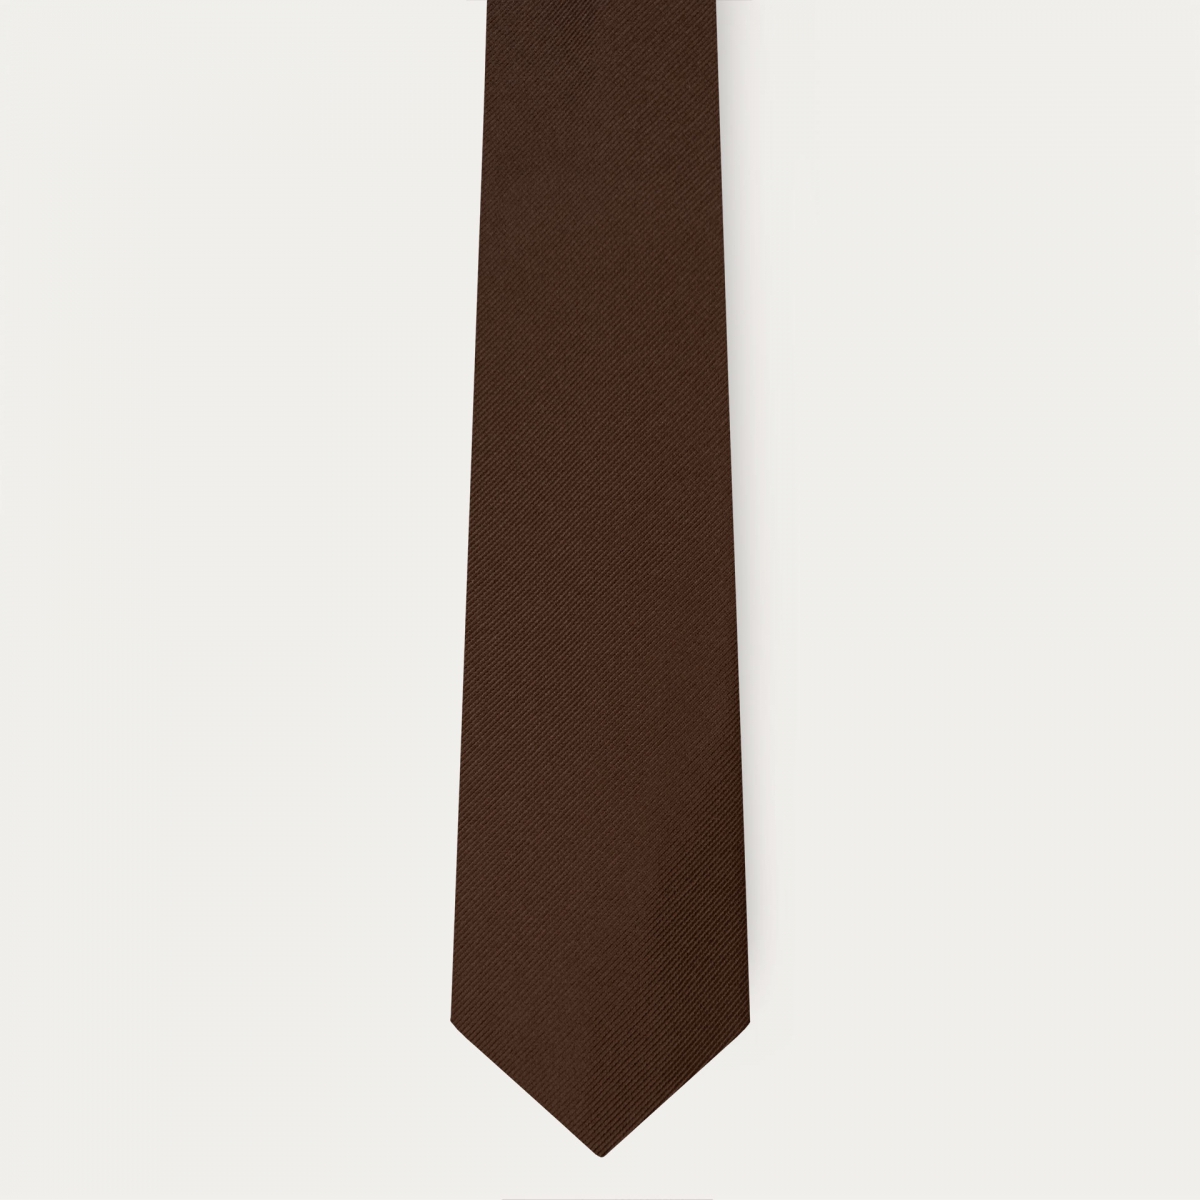 Cravatta marrone in seta